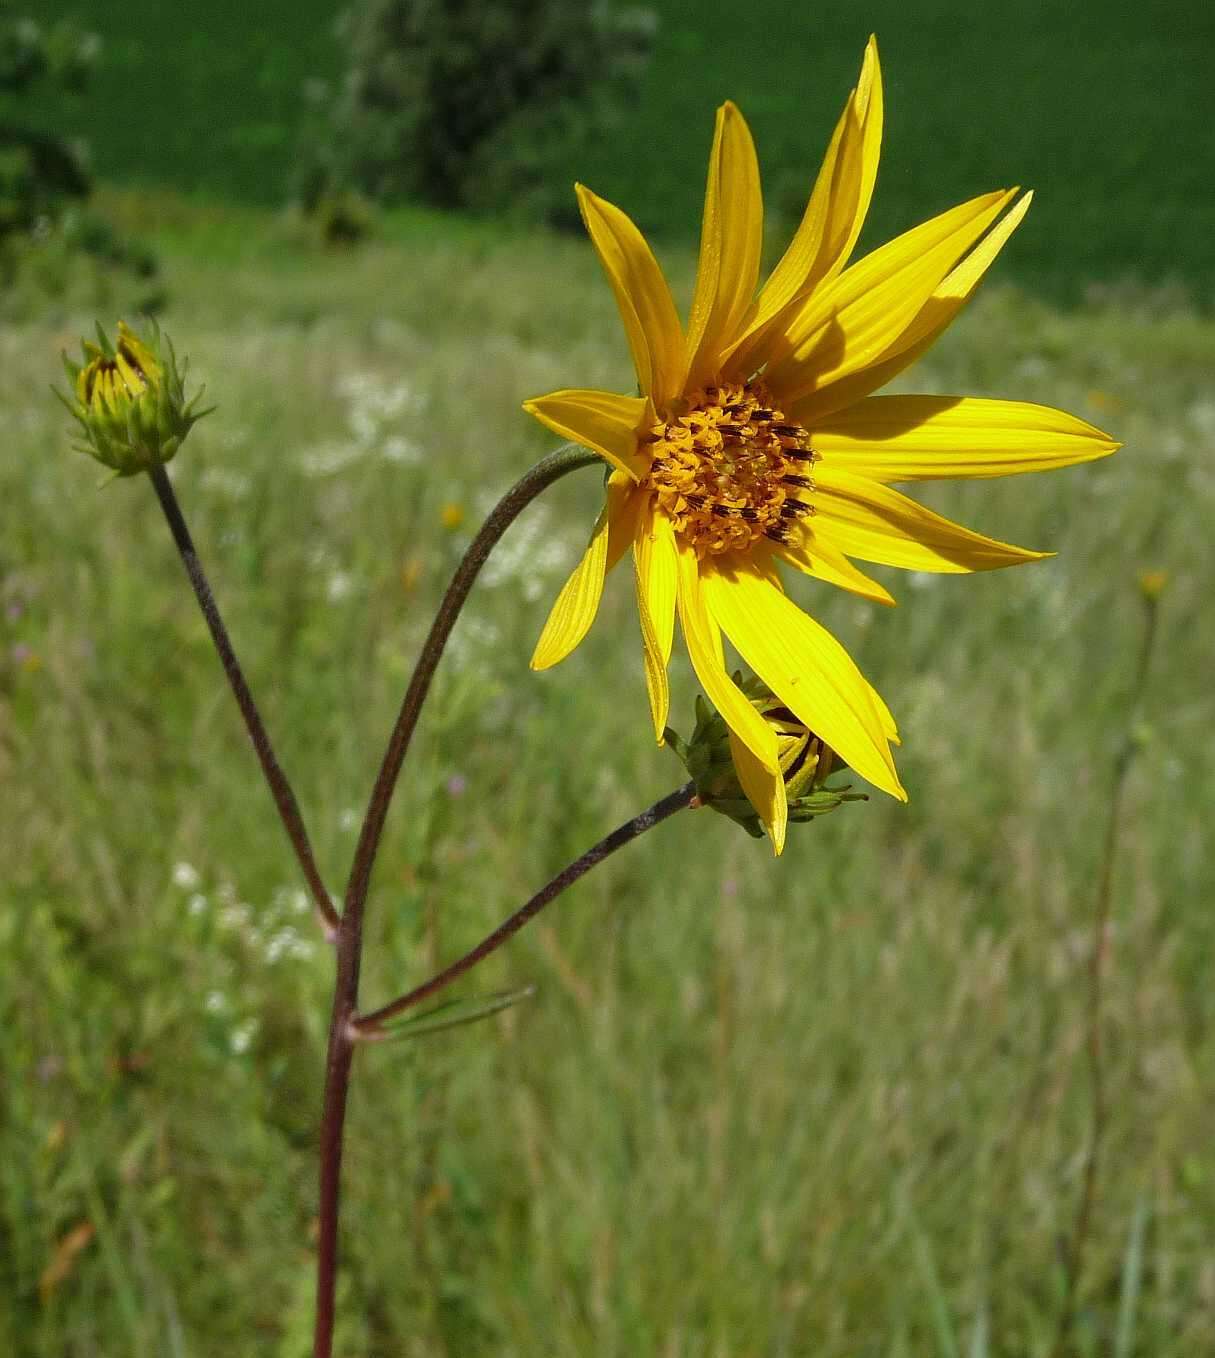 Image of fewleaf sunflower